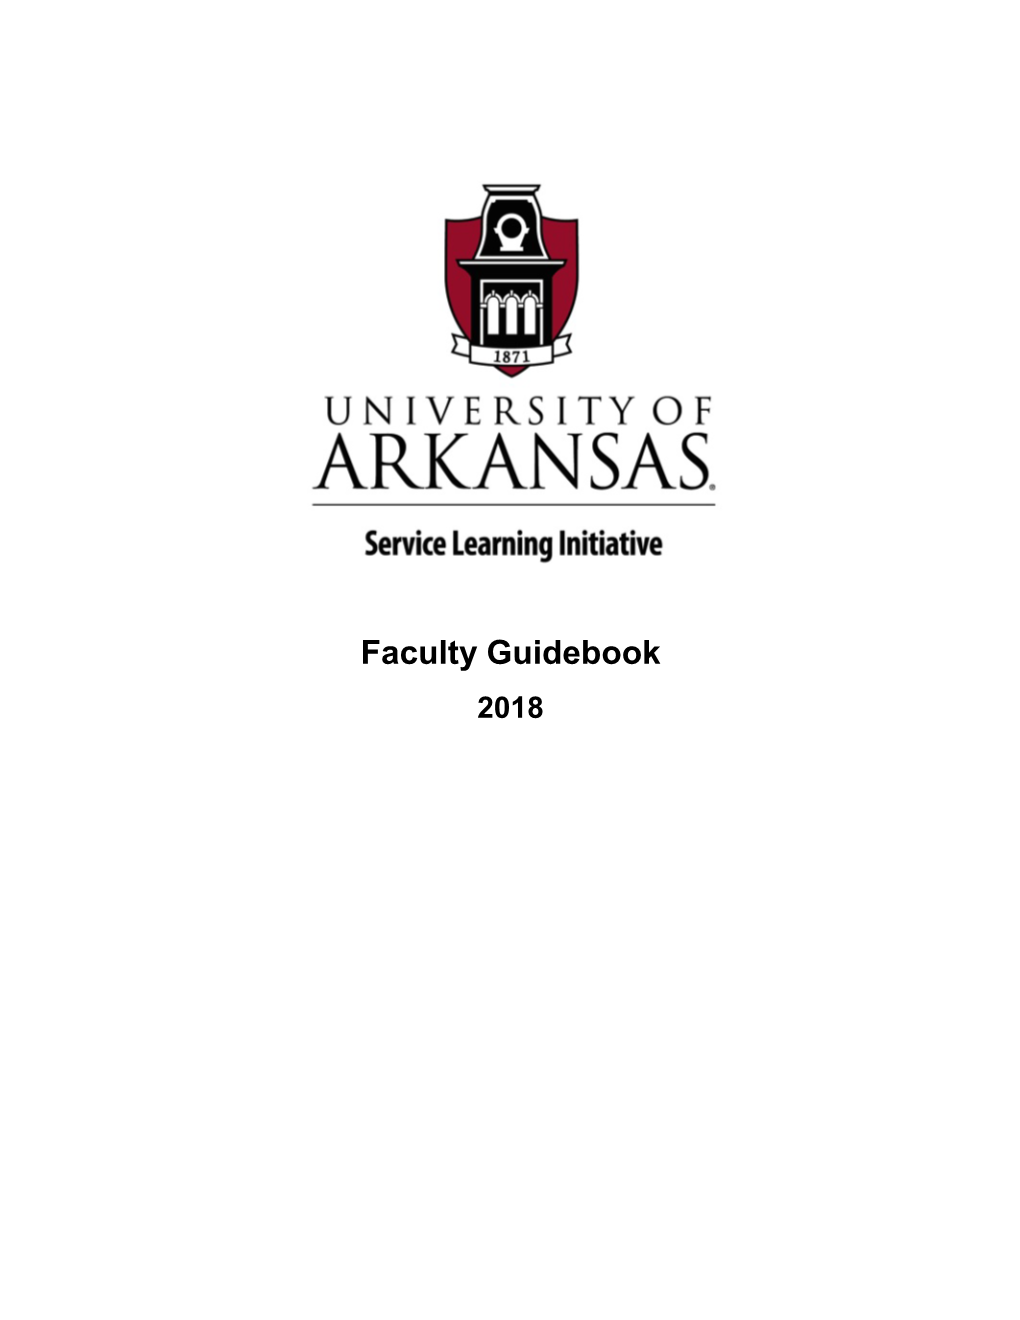 Faculty Guidebook 2018